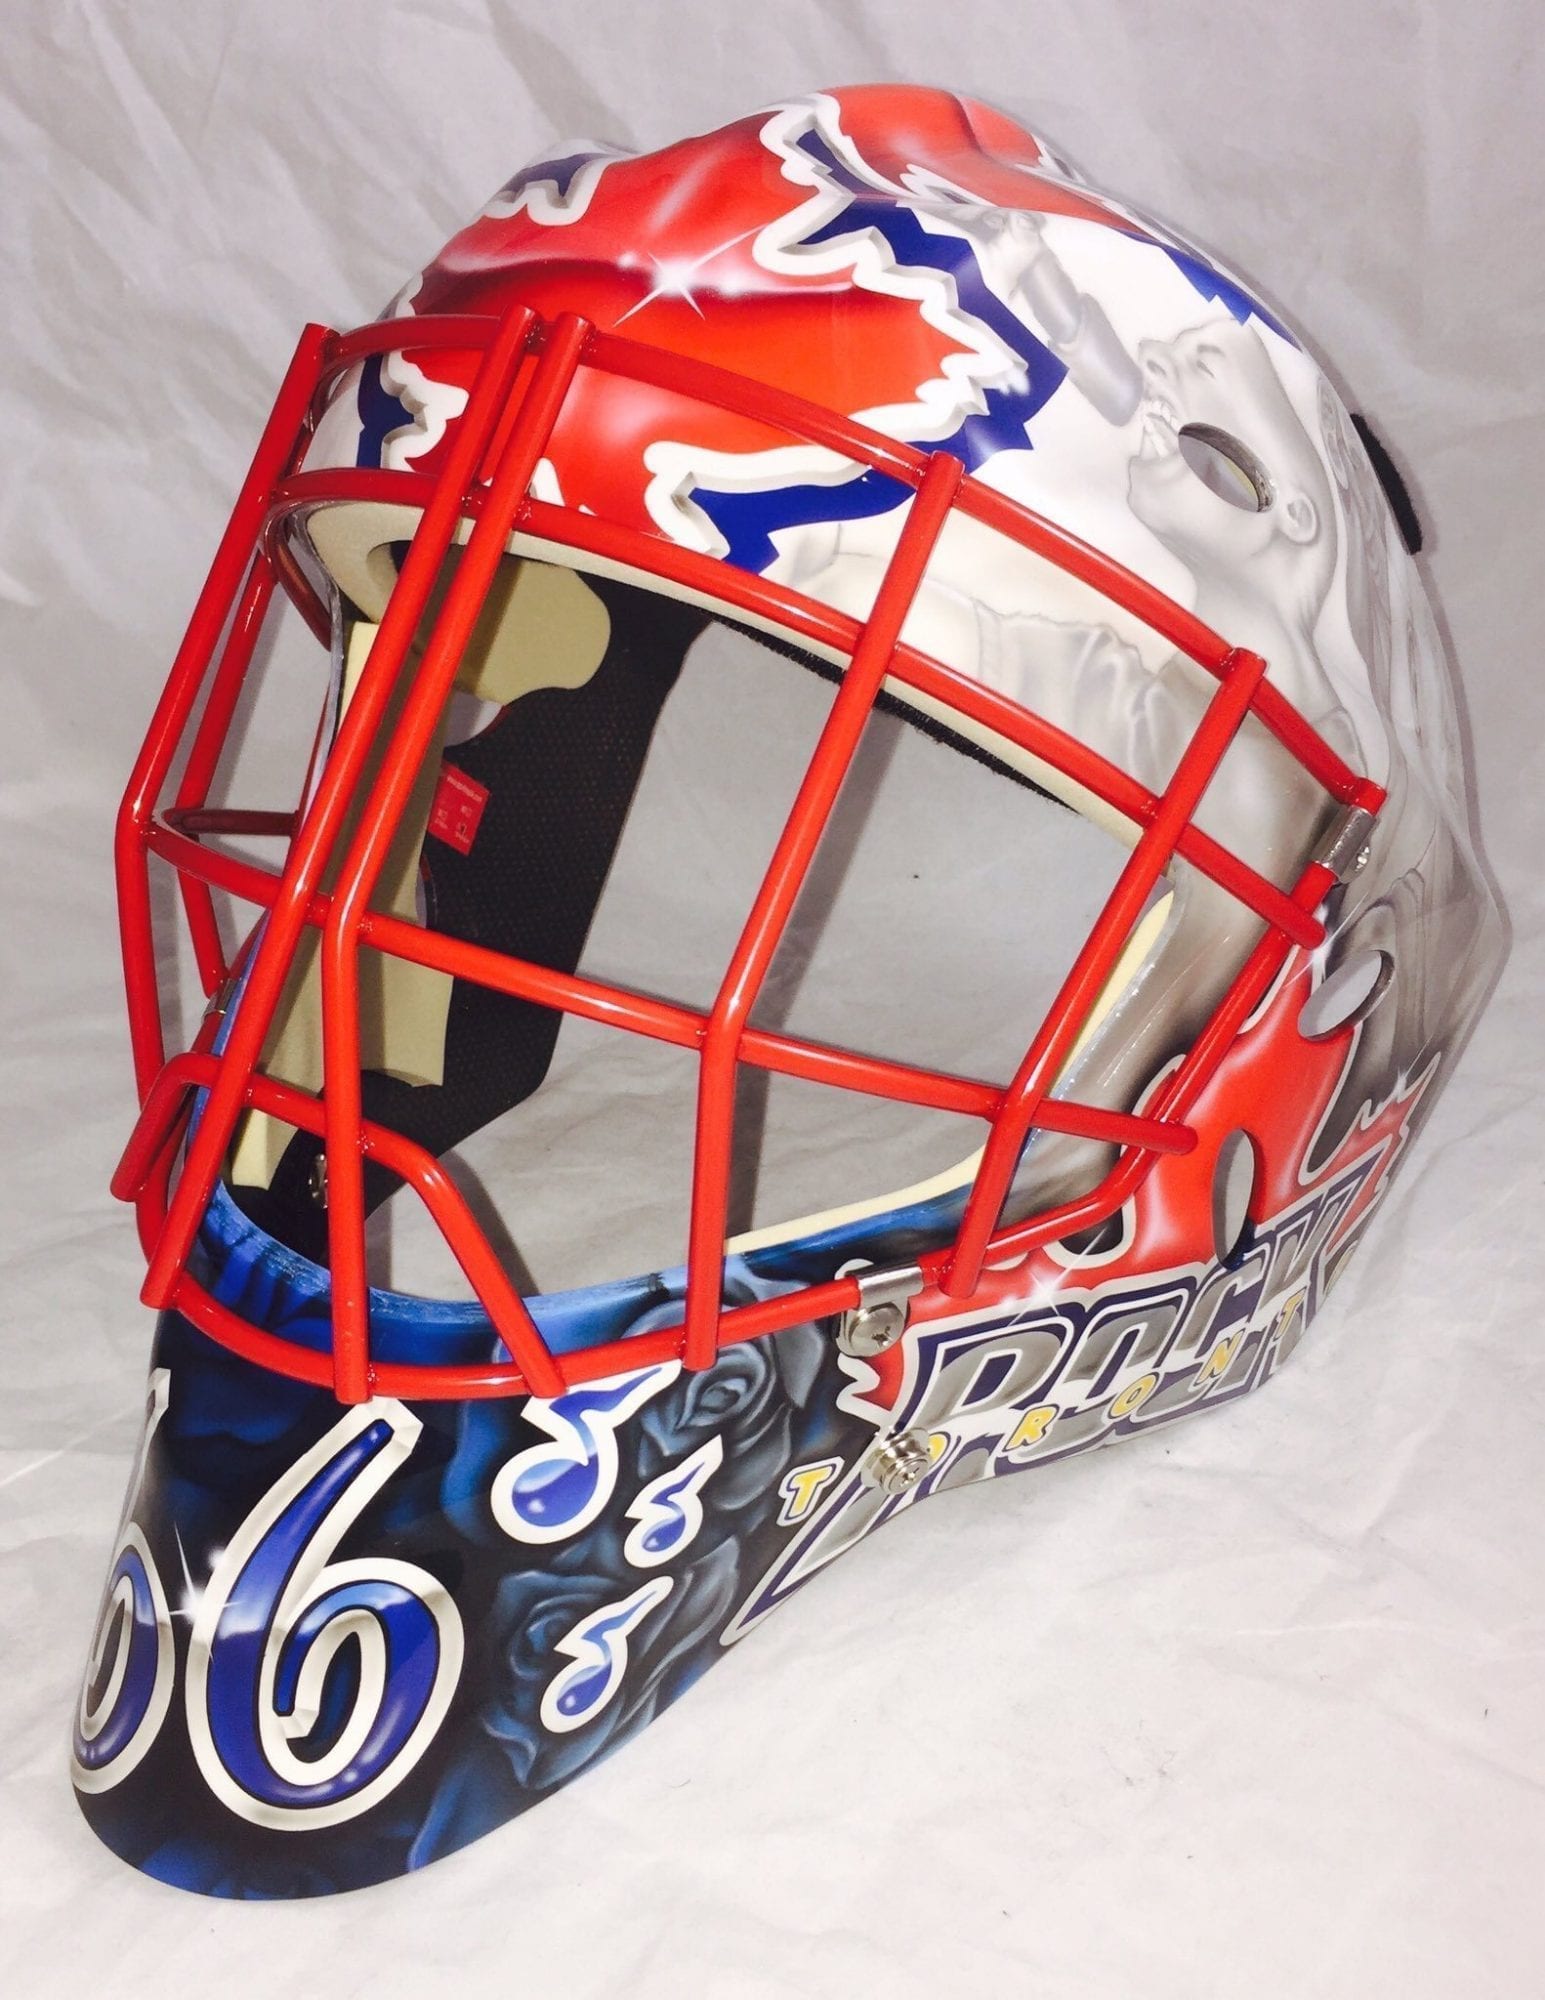 Nick Rose's new rock goalie helmet